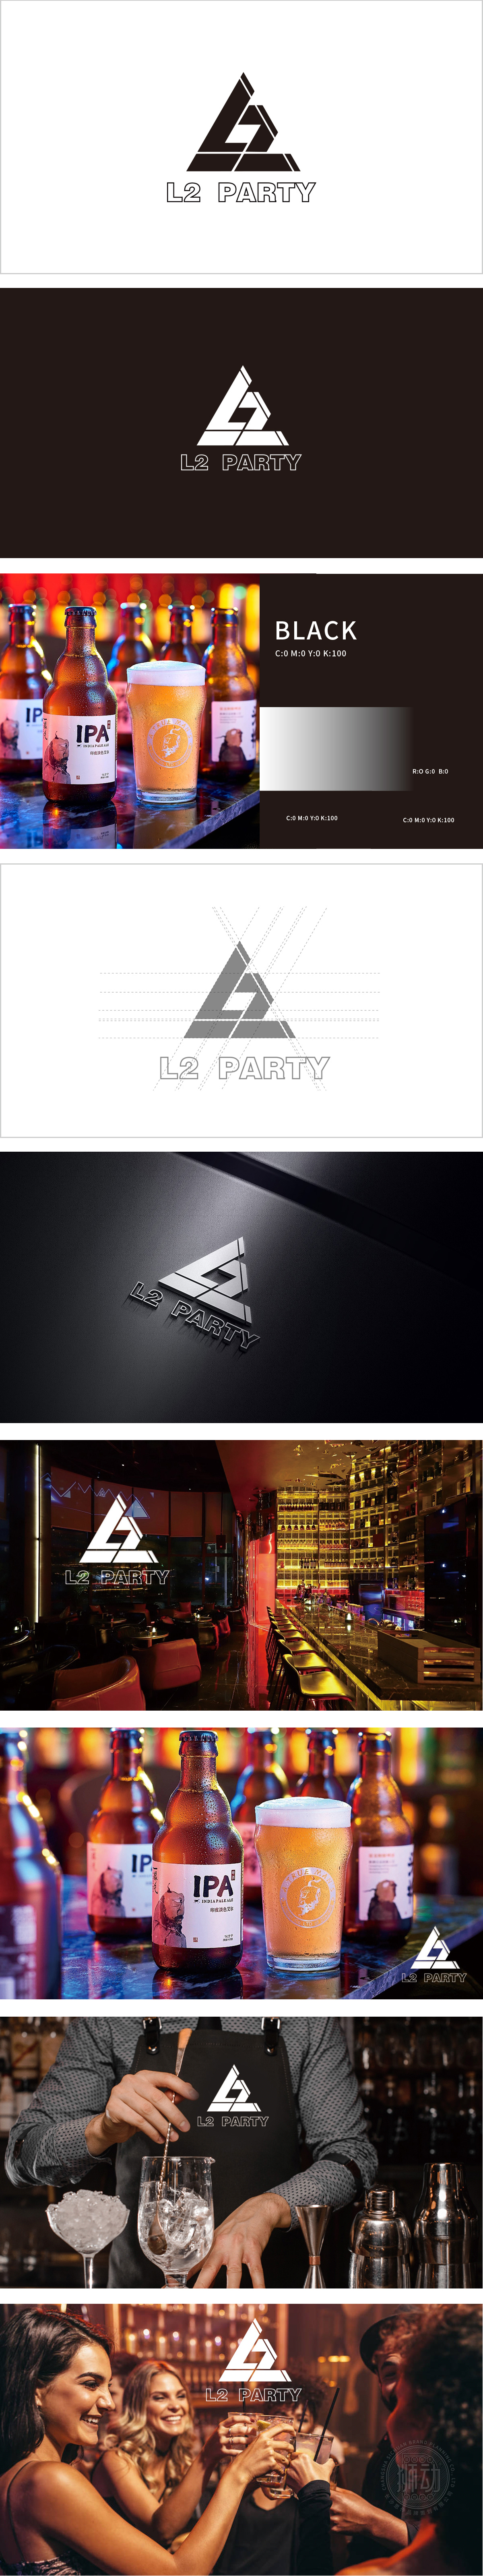 L2 party 休闲娱乐生活服务LOGO设计